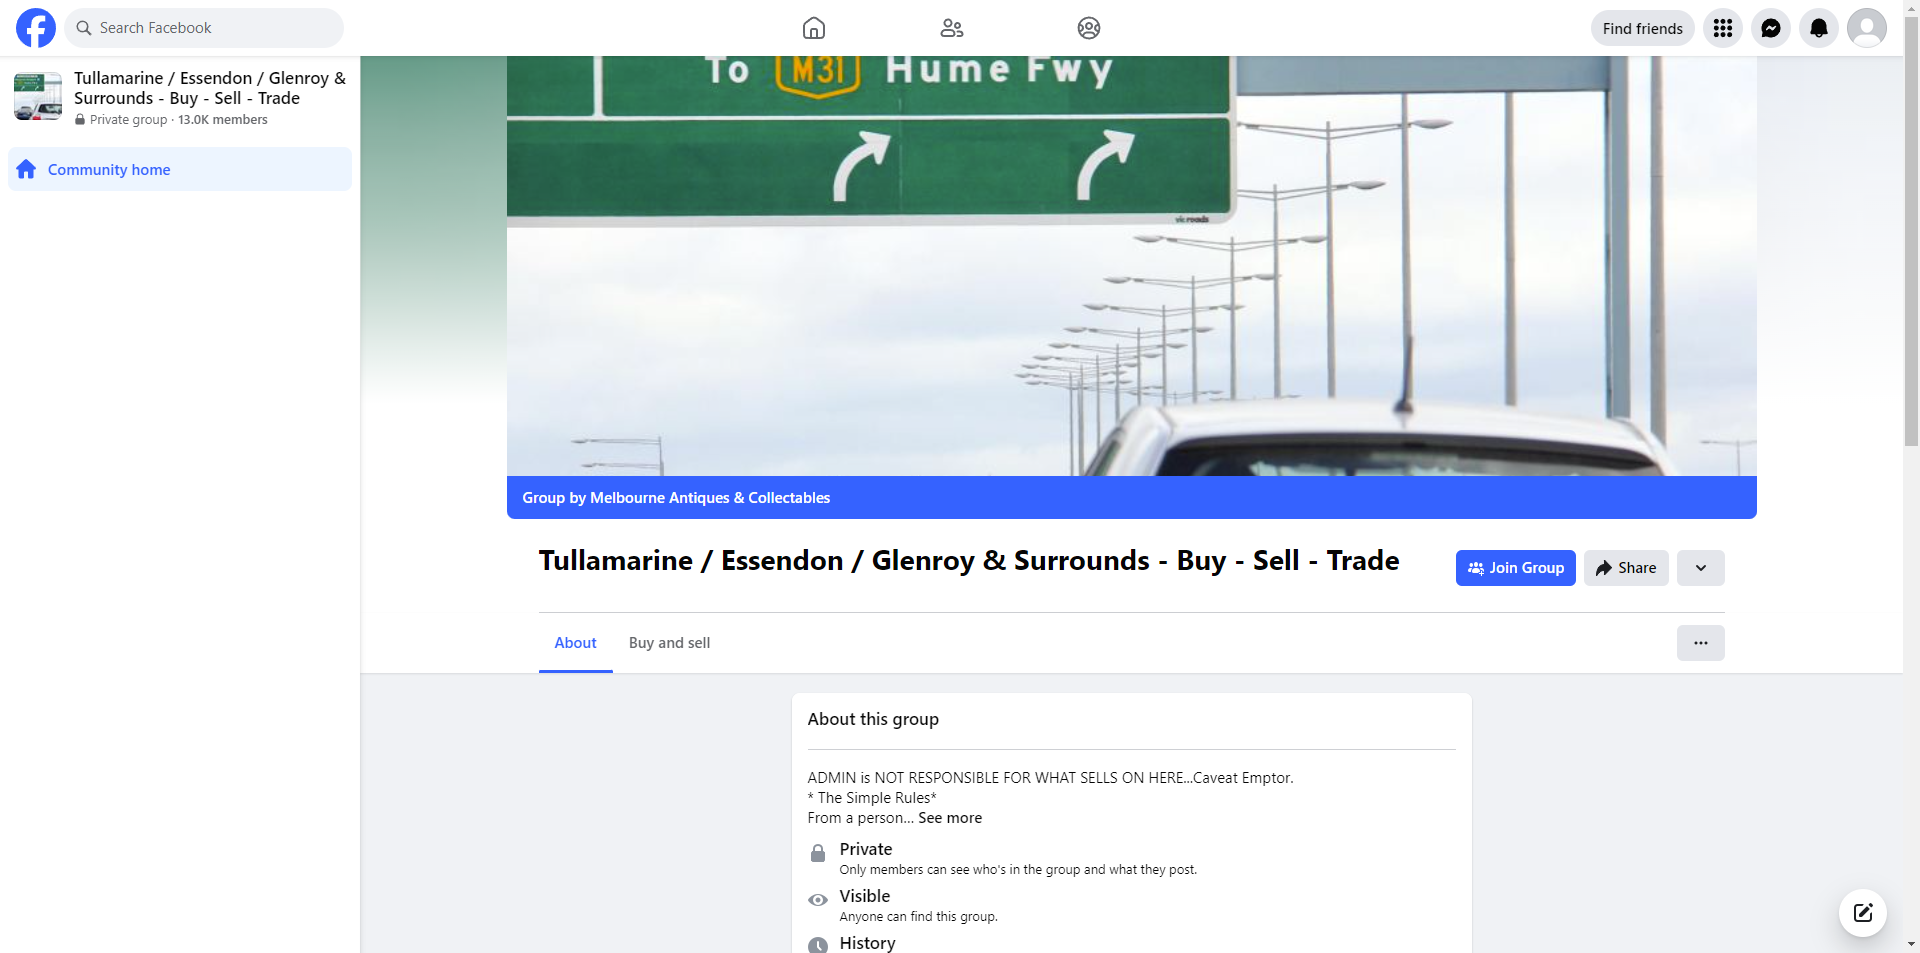 Tullamarine/Essensdon/Glenroy & Surrounds - Buy - Sell - Trade